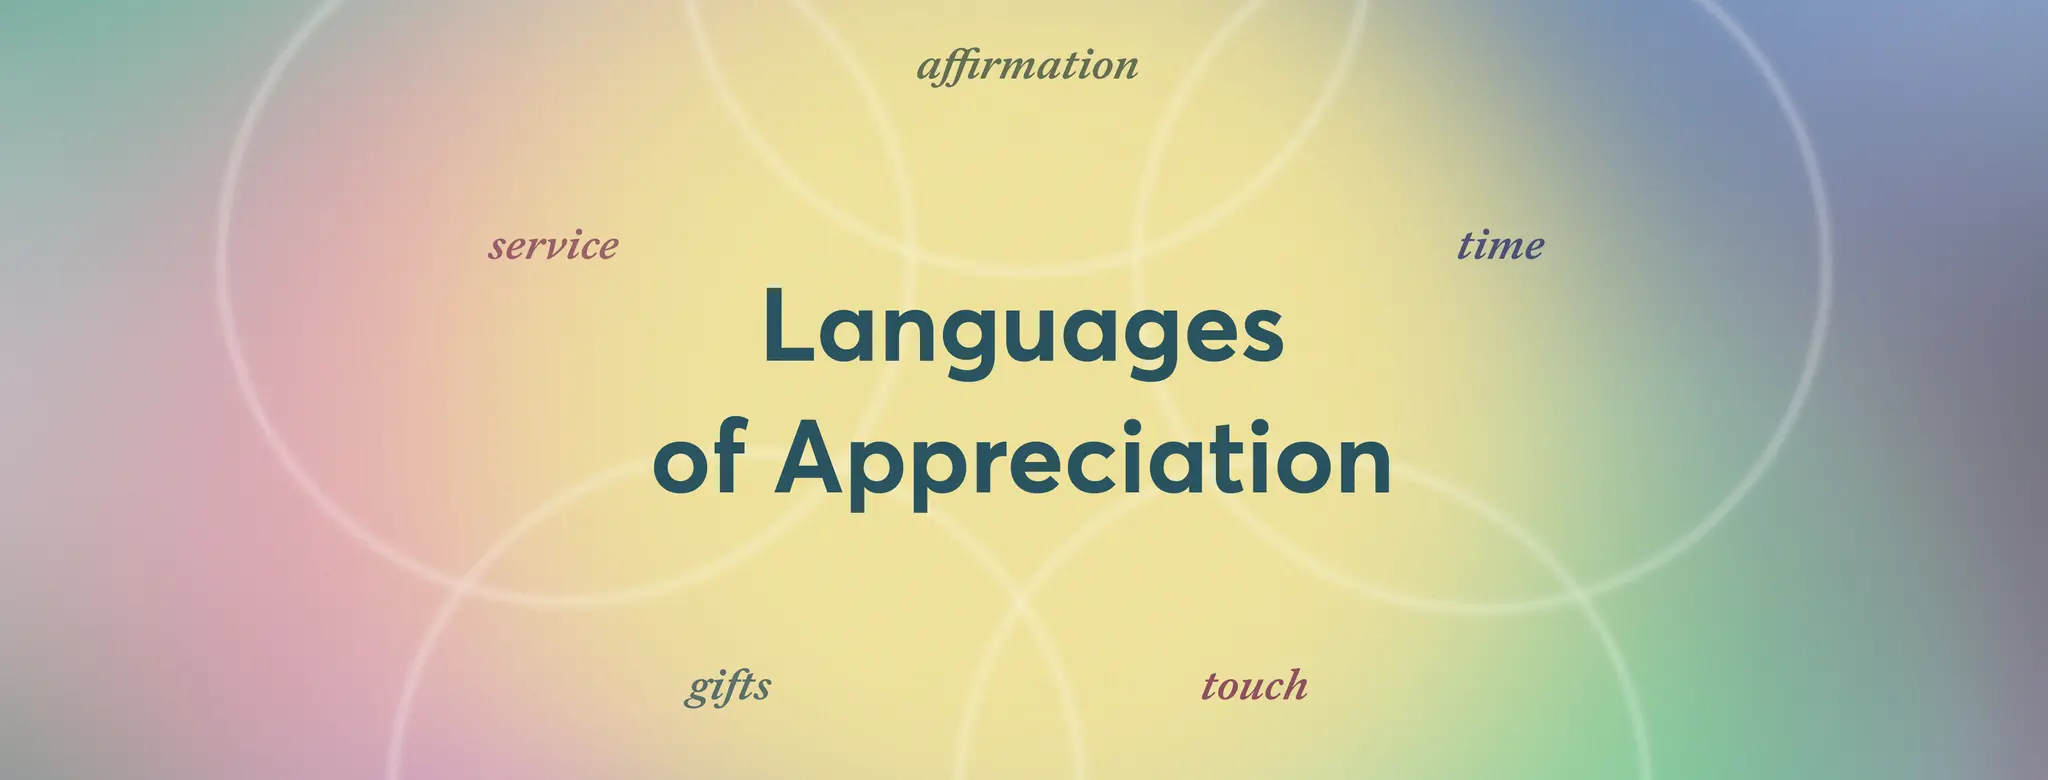 languages of appreciation visual